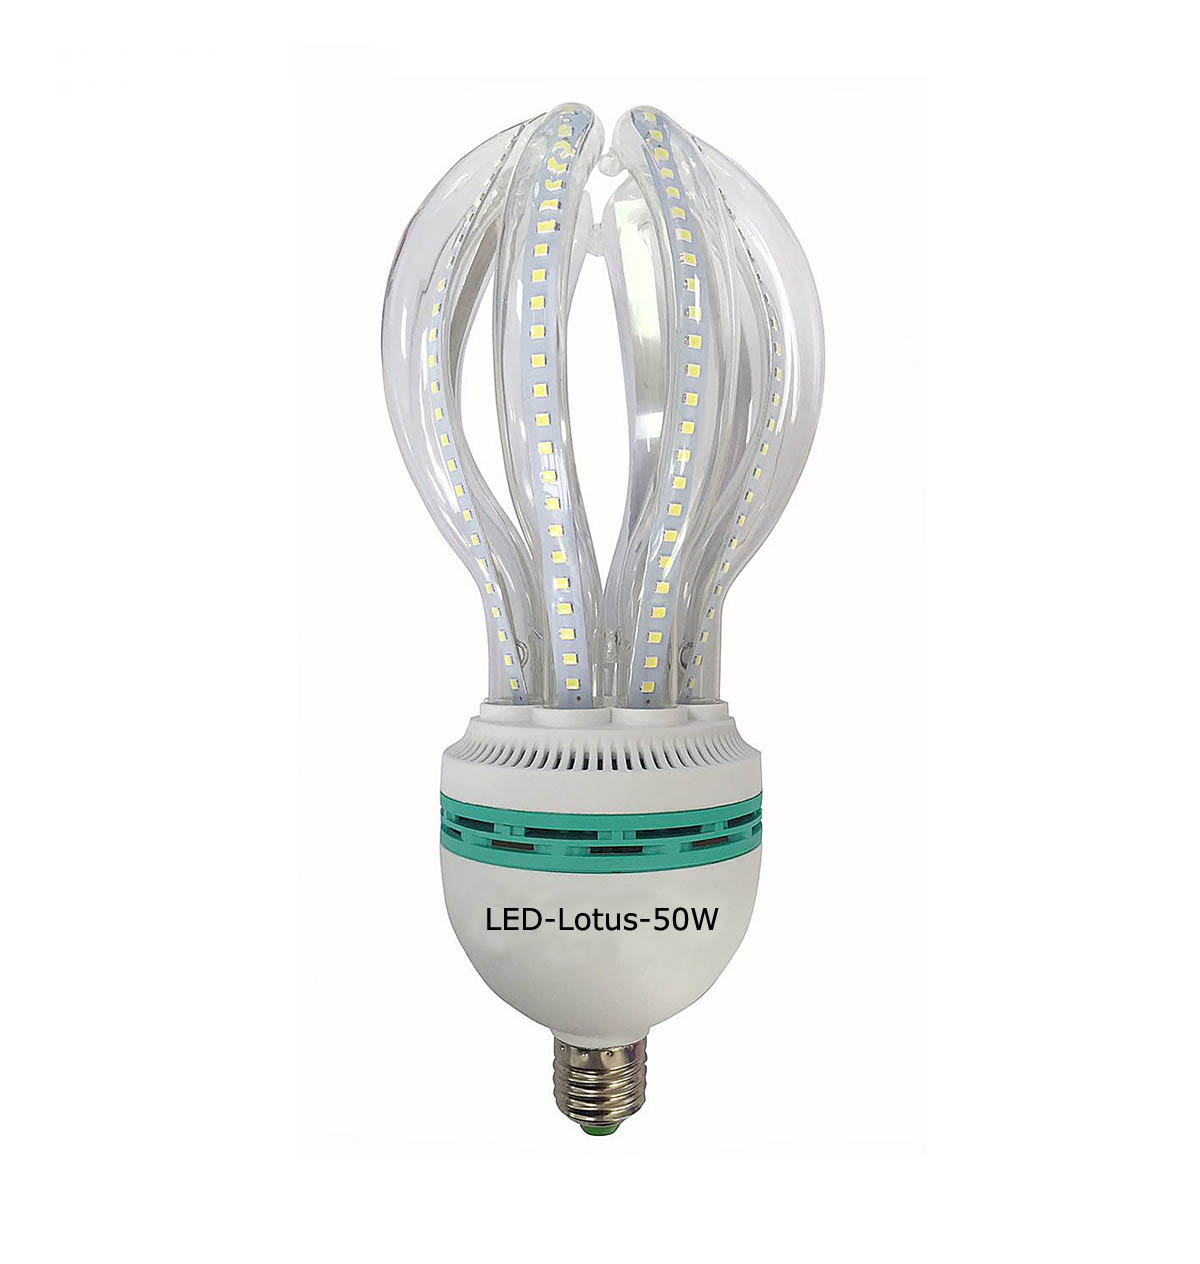 LED lotus bulbs 50W